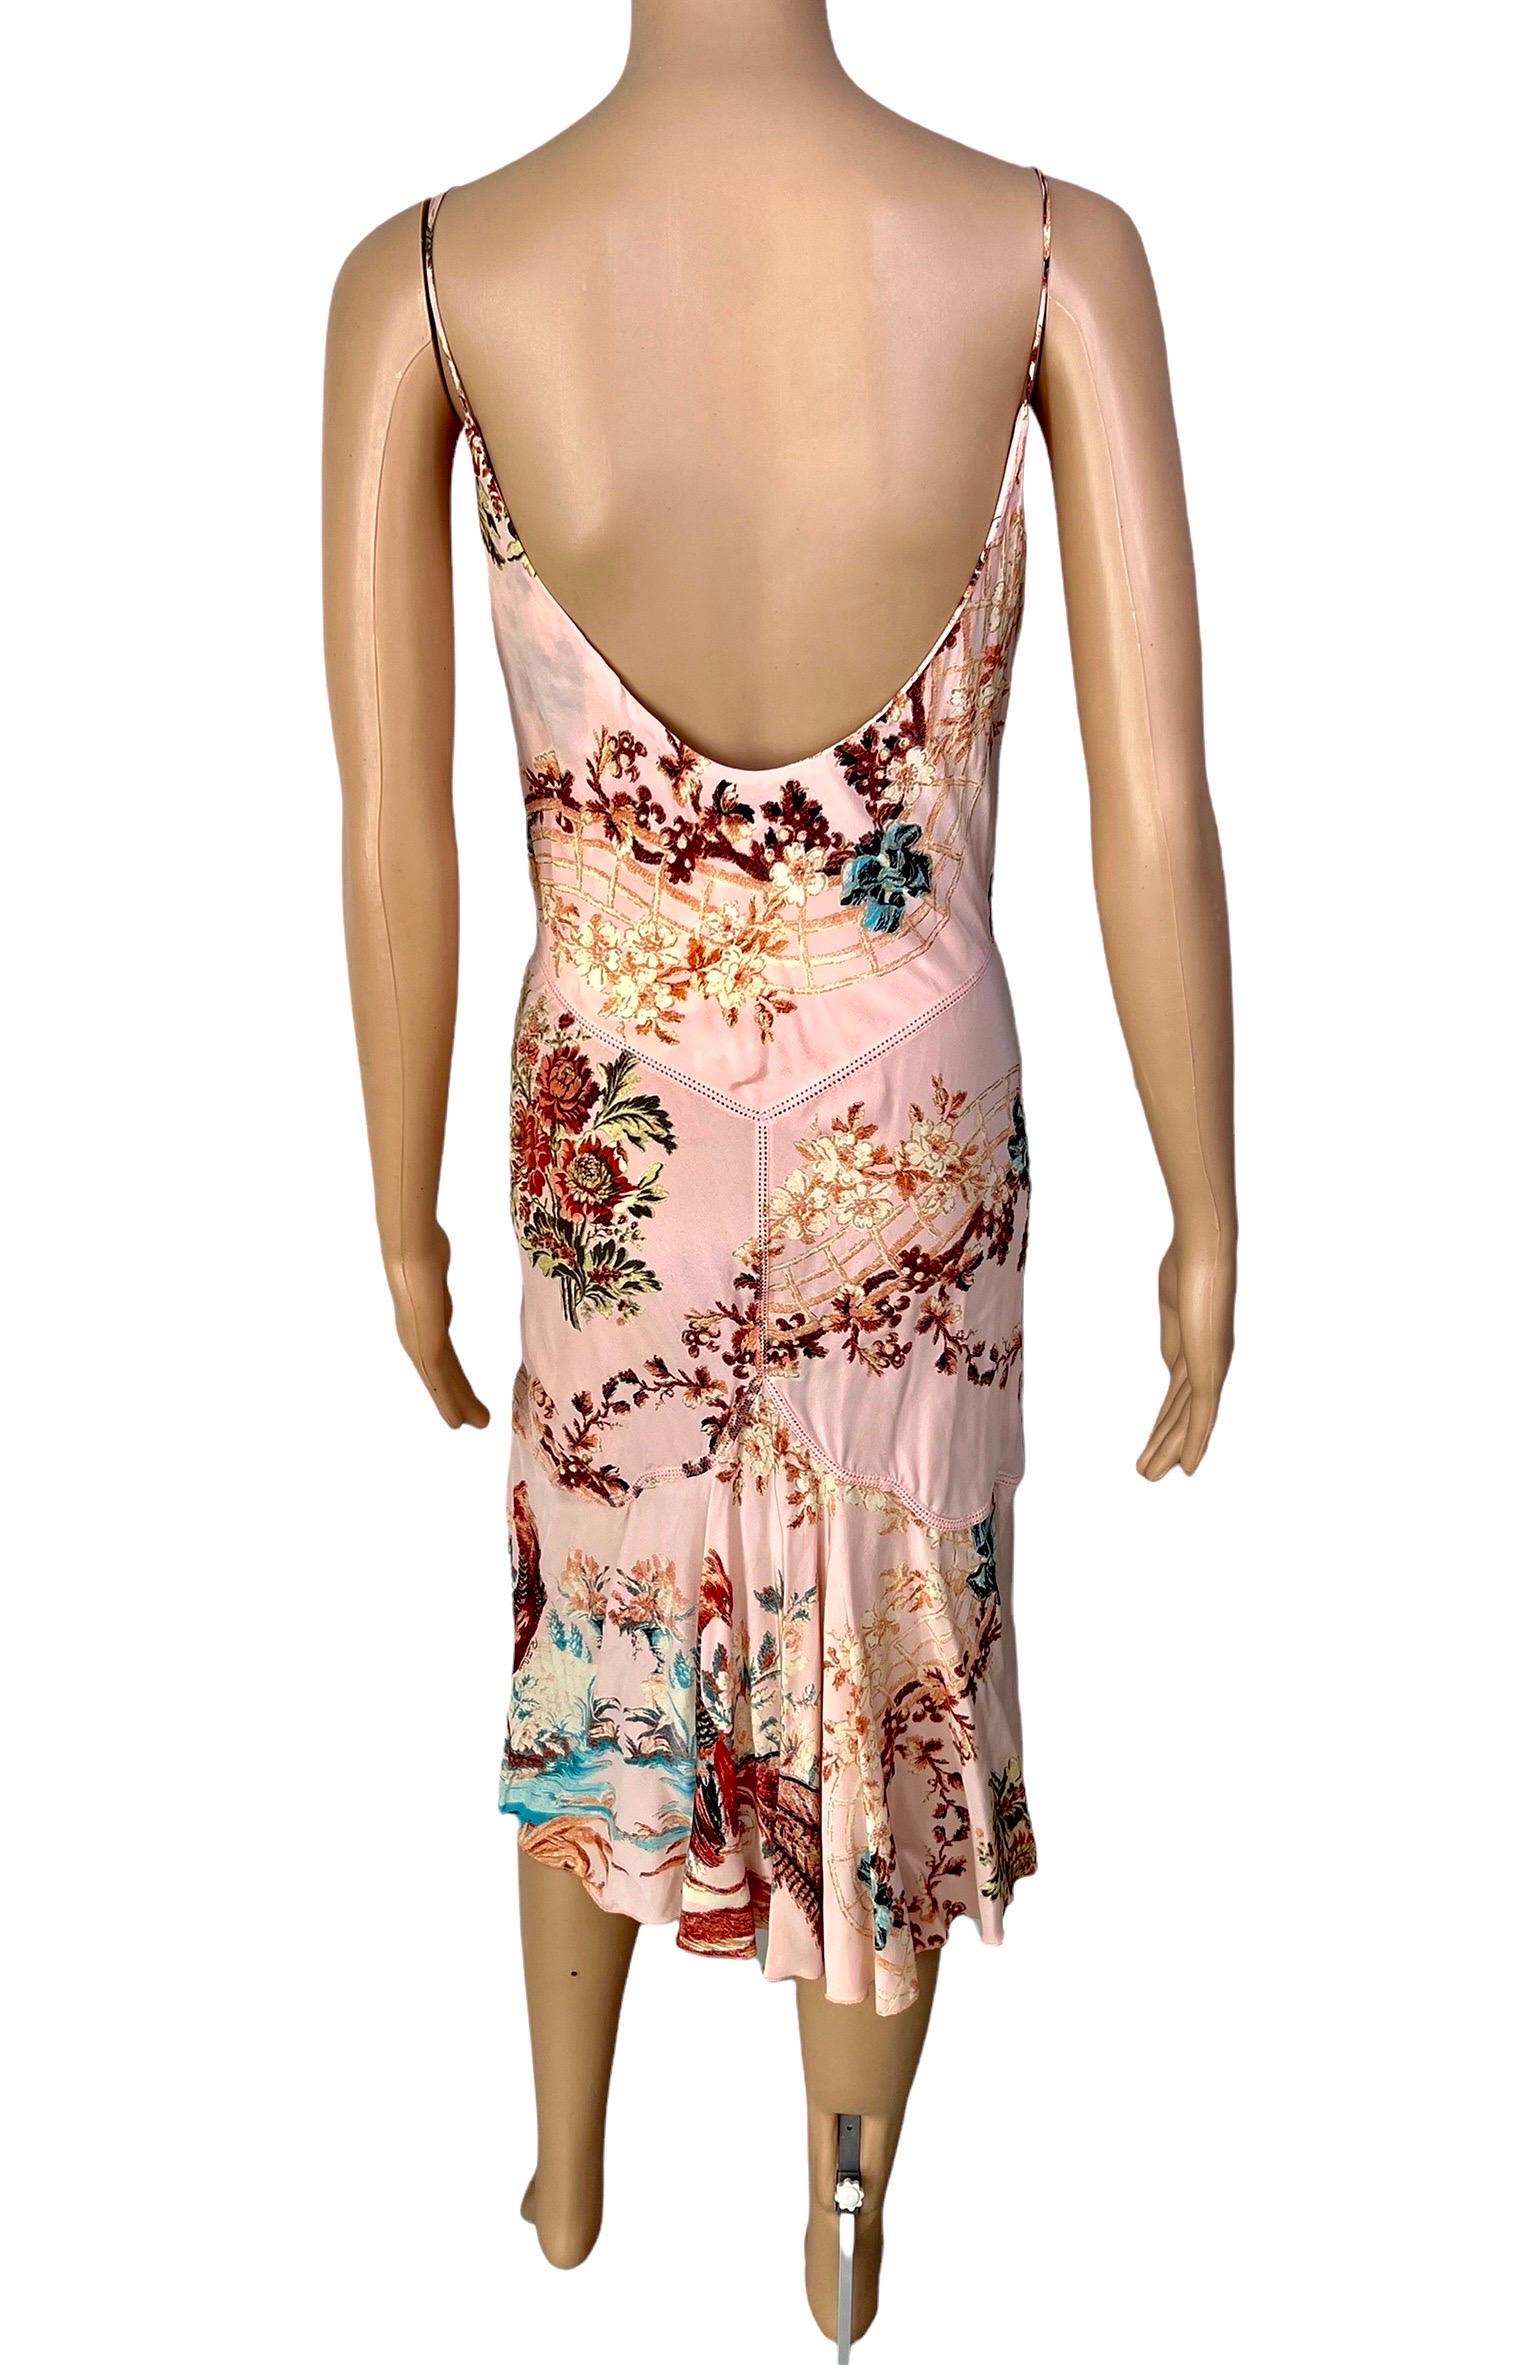 Roberto Cavalli S/S 2003 Plunging Neckline Backless Printed Silk Slip Midi Dress In Good Condition For Sale In Naples, FL